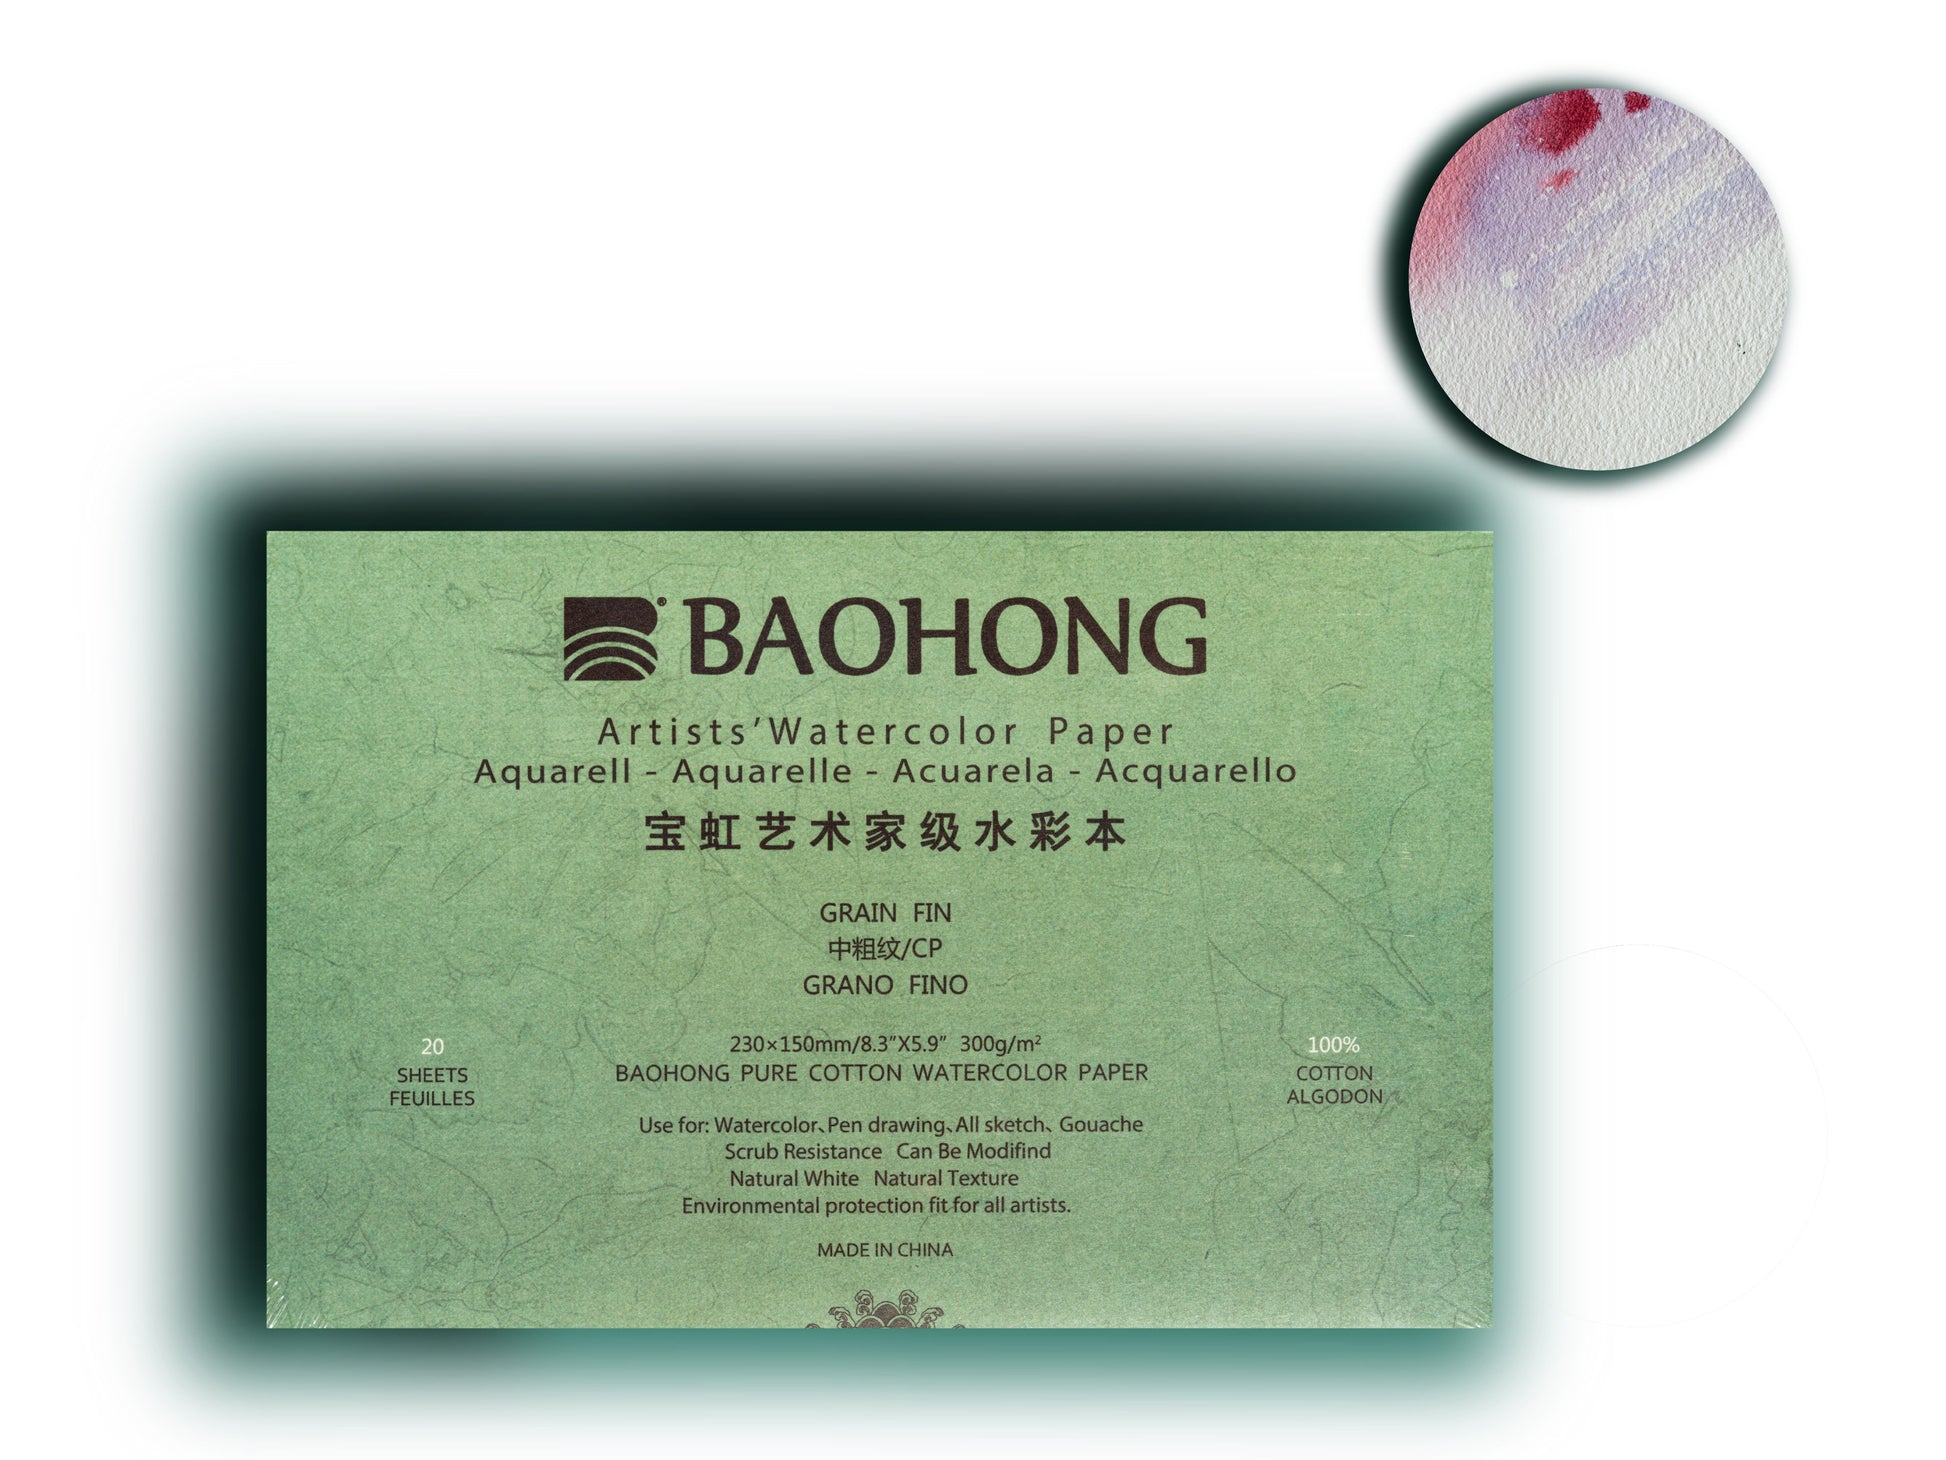 Baohong Watercolor Trial Pad, 4.1x5.7, Artists' Grade, Cold Pressx6, – All  About Art International, LLC